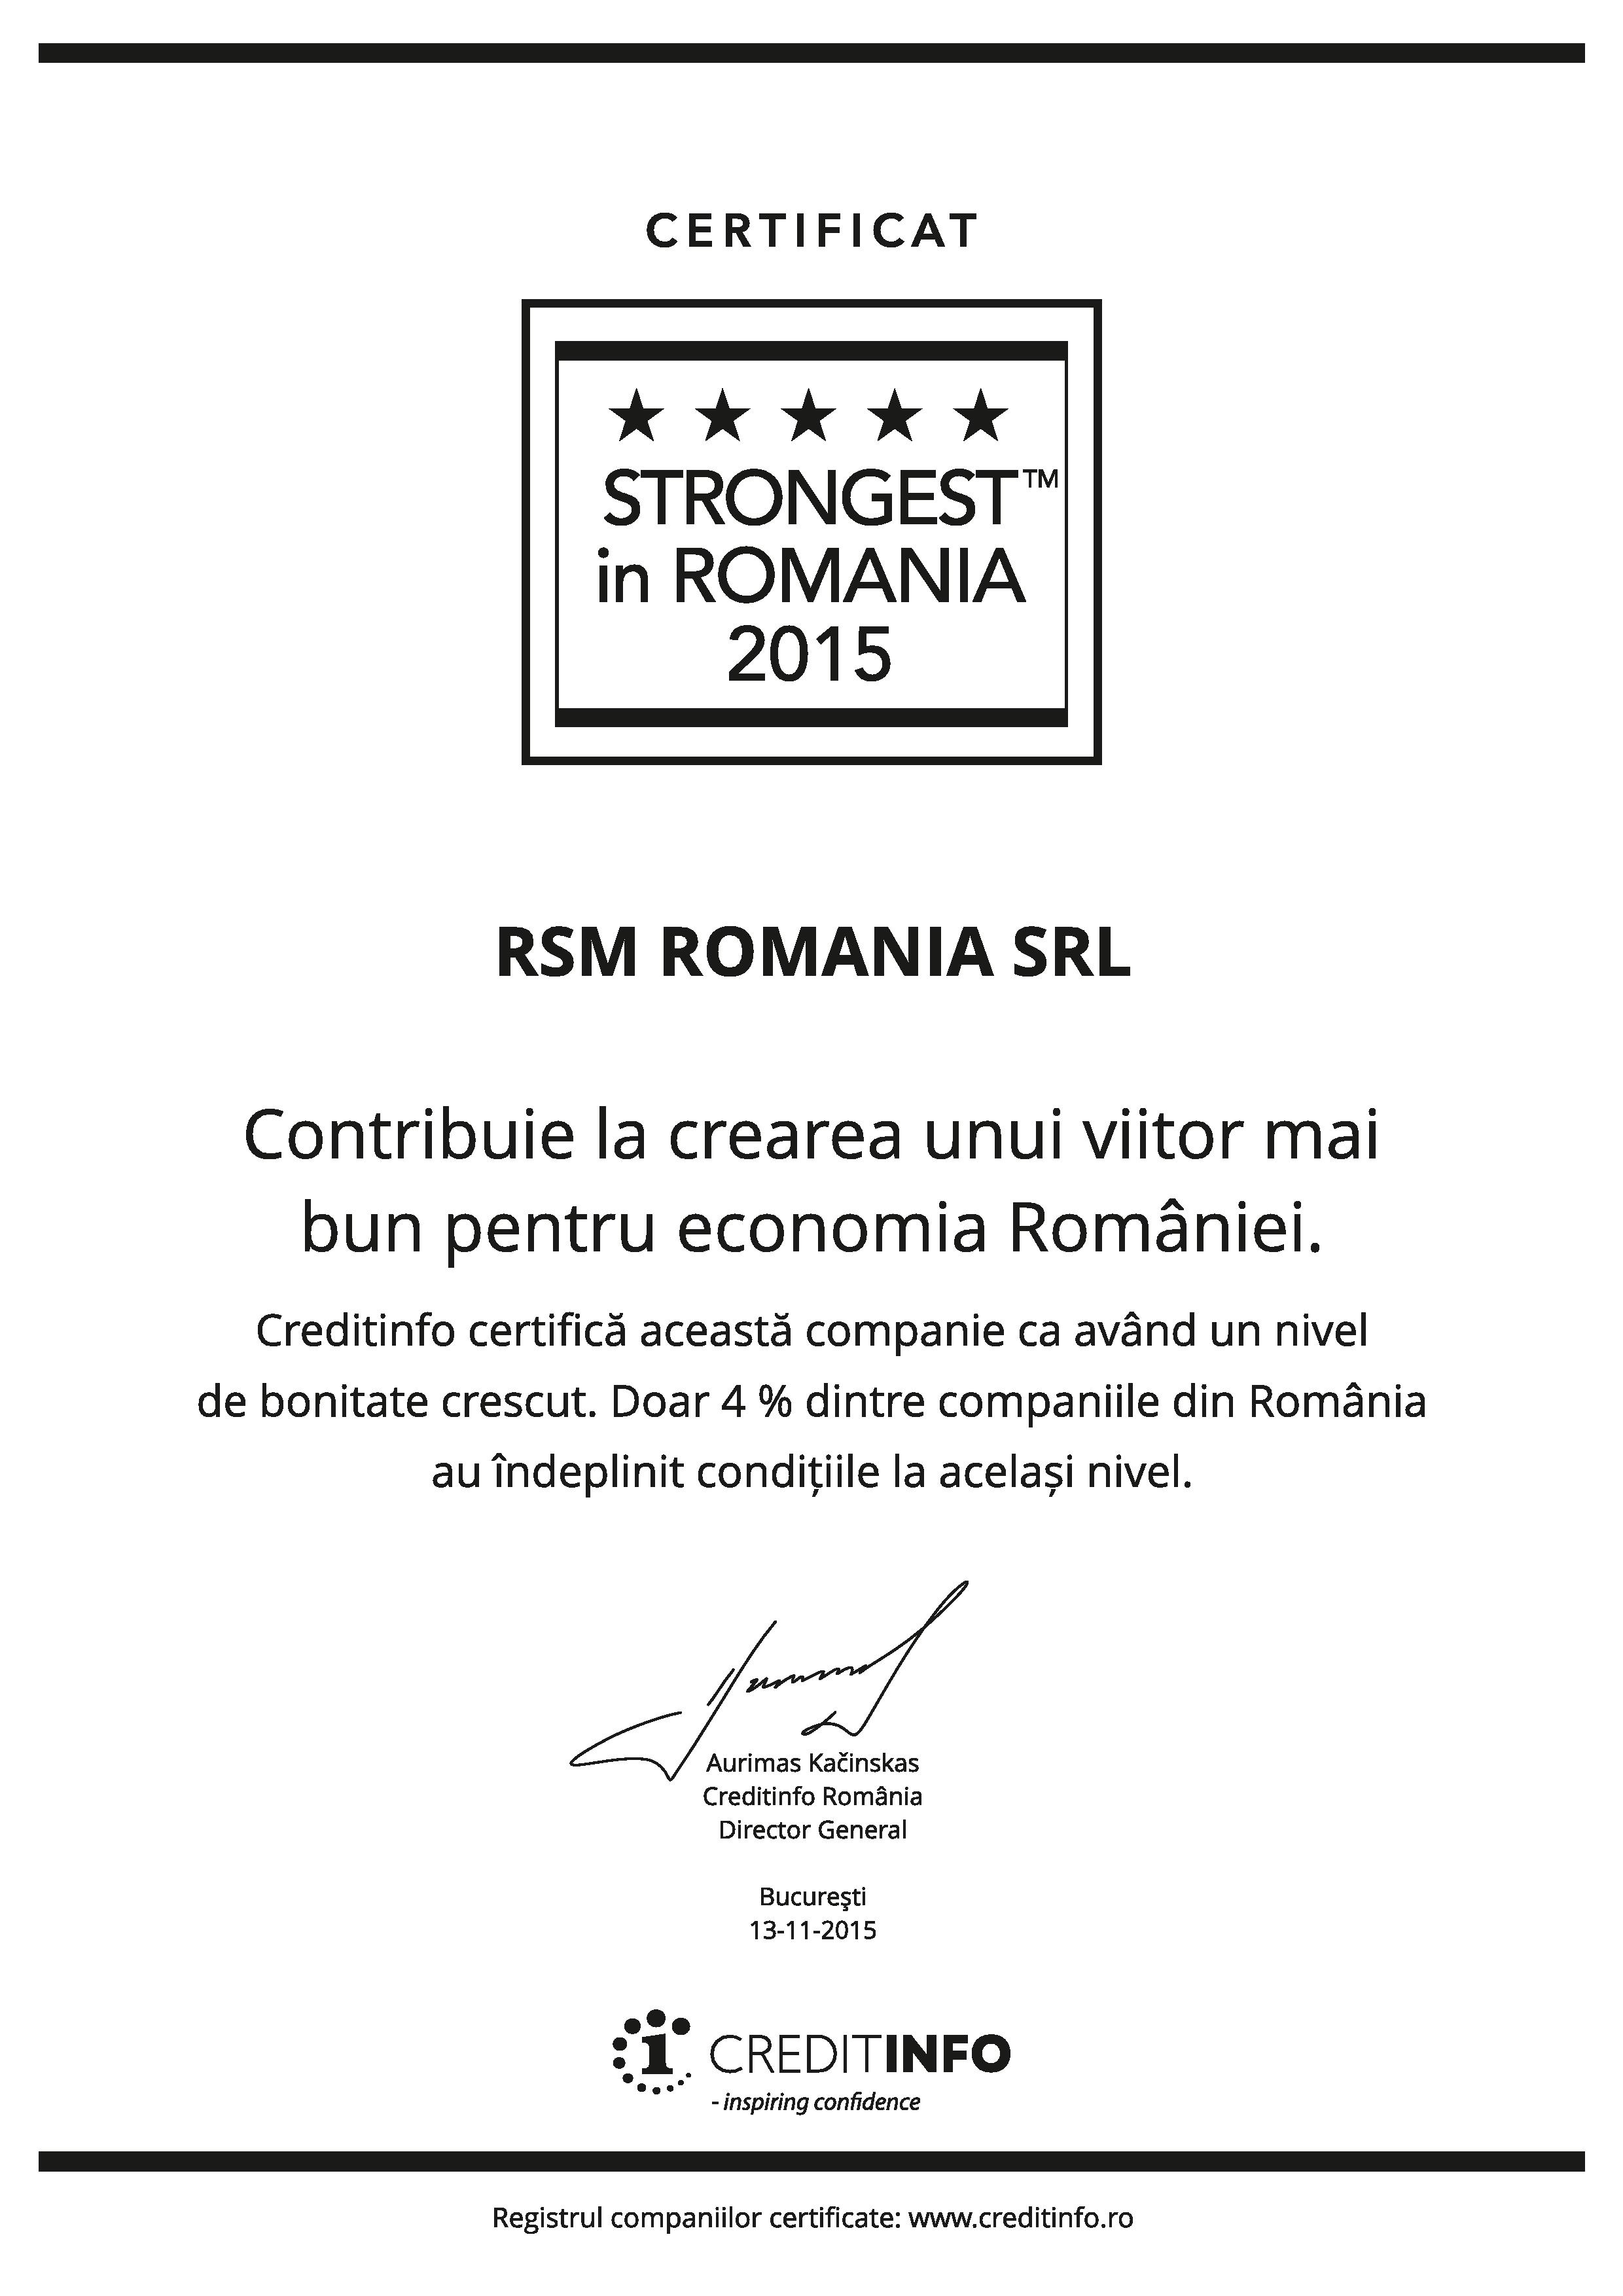 rsm_romania_strongest_in_romania.jpg